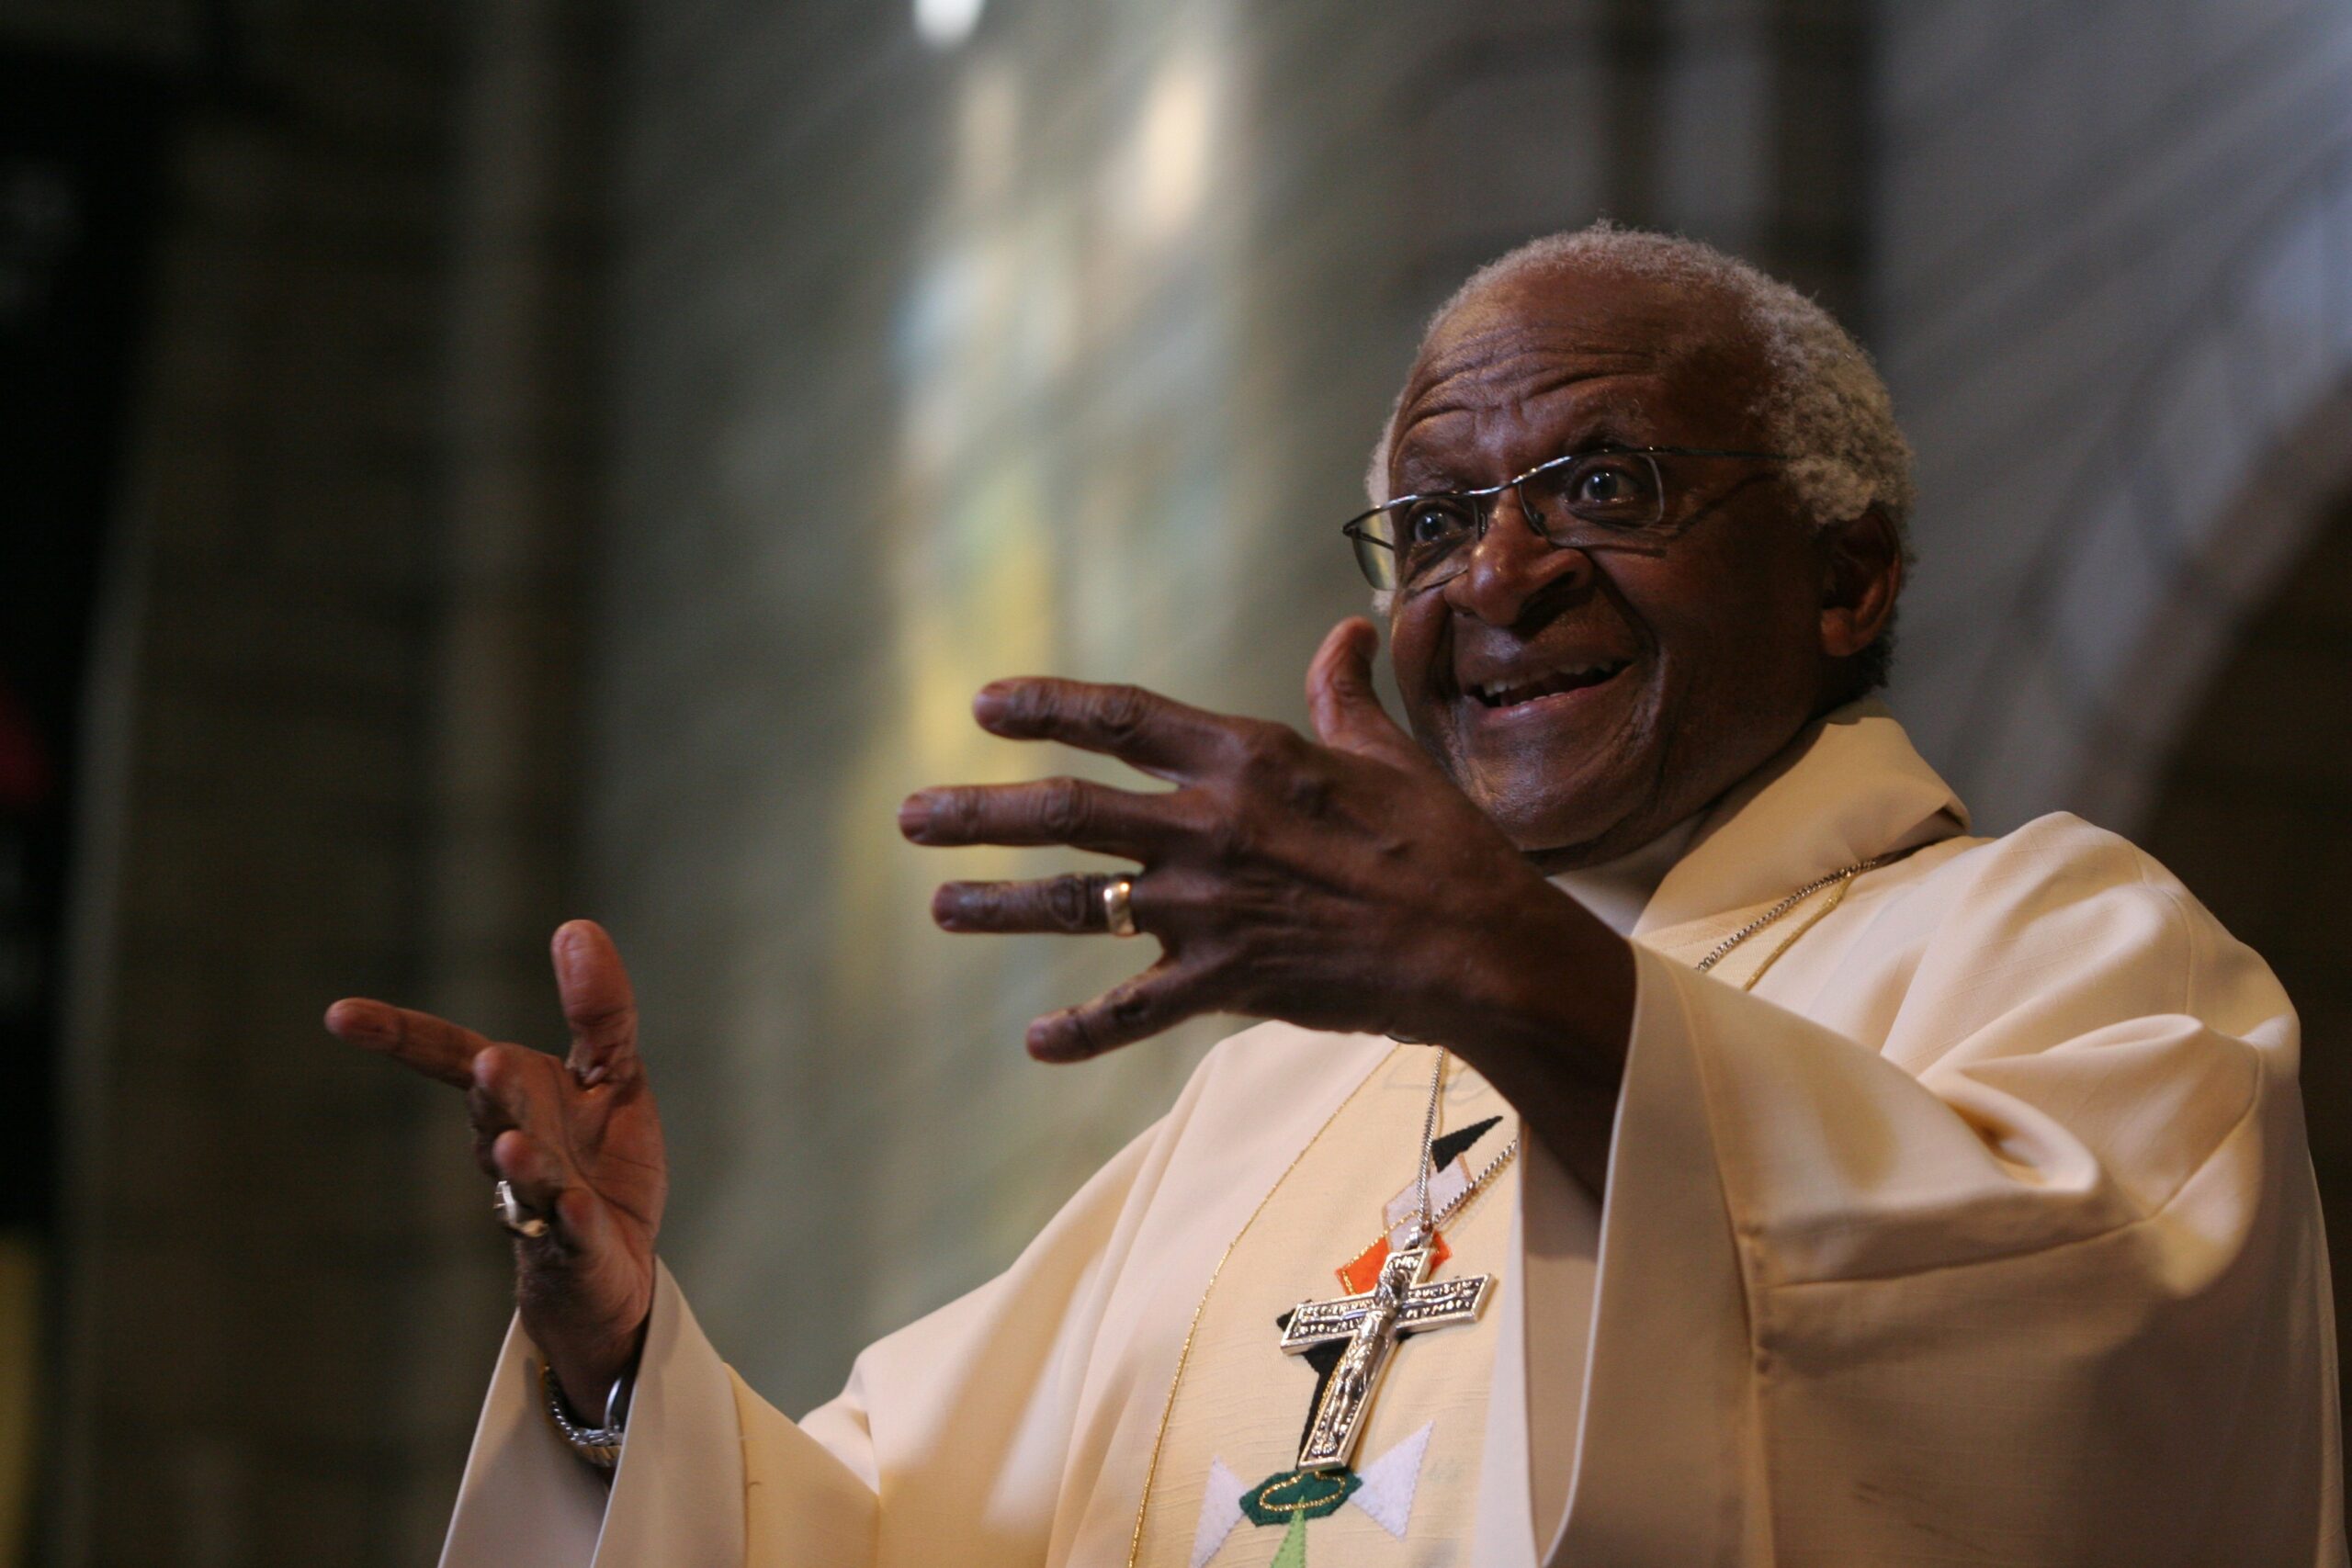 Desmond Tutu, Archbishop and Anti-Apartheid Activist, Dies at 90